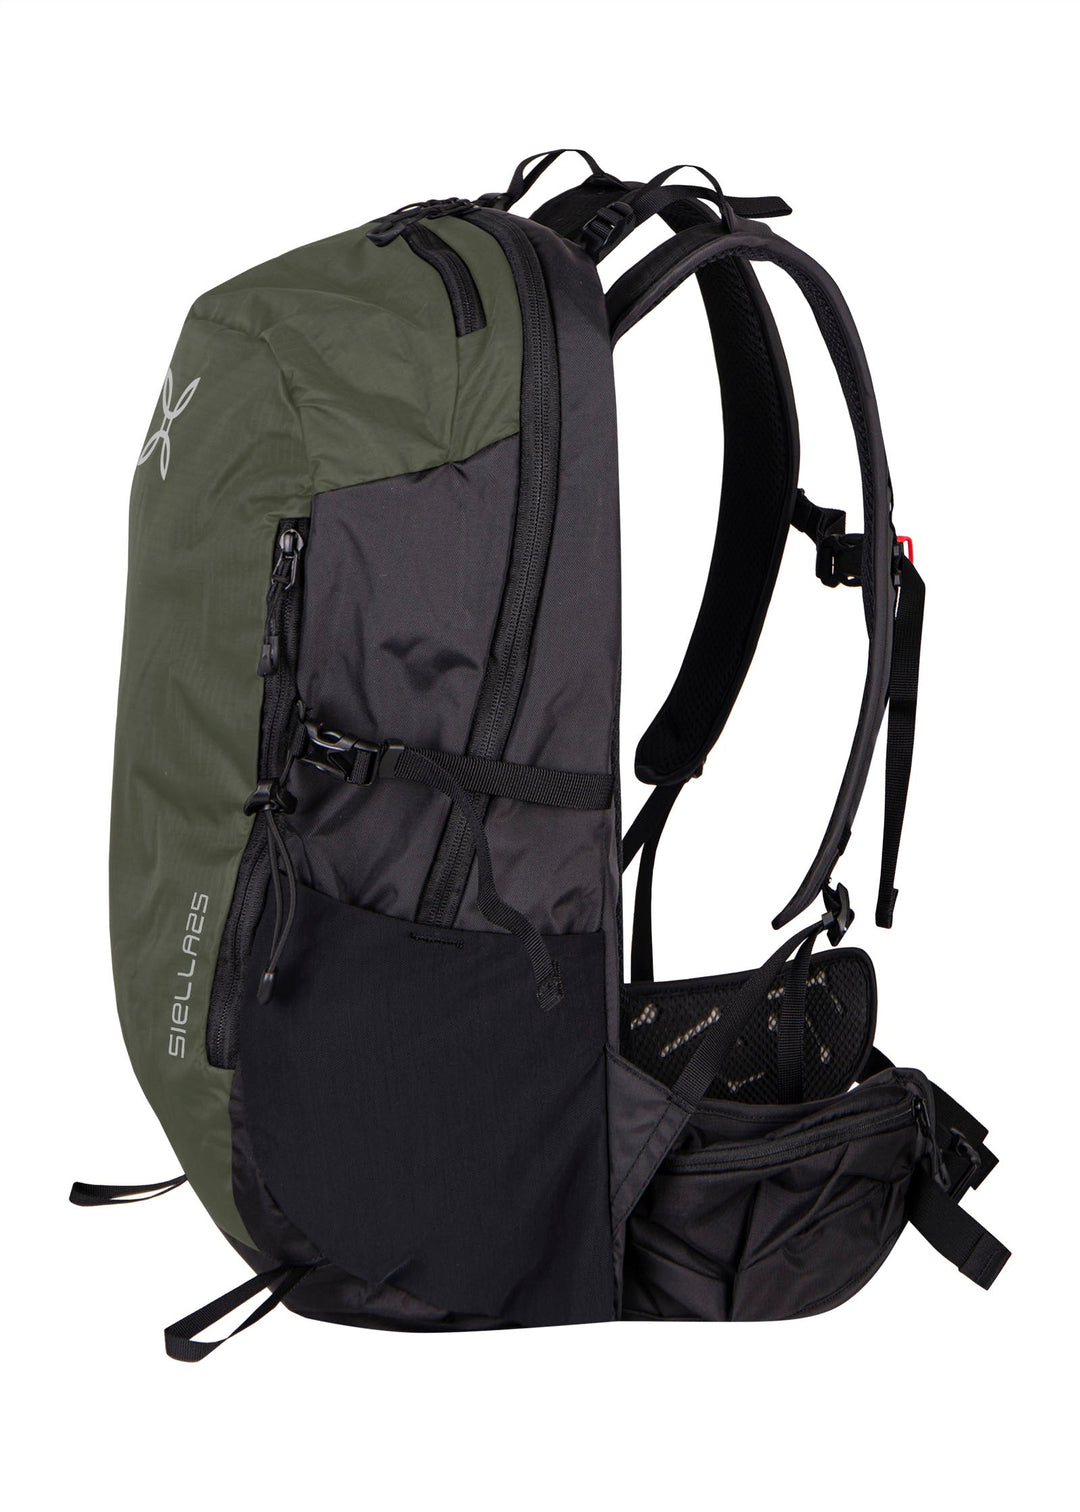 Siella 25 Backpack - Verde Salvia (49) - Blogside